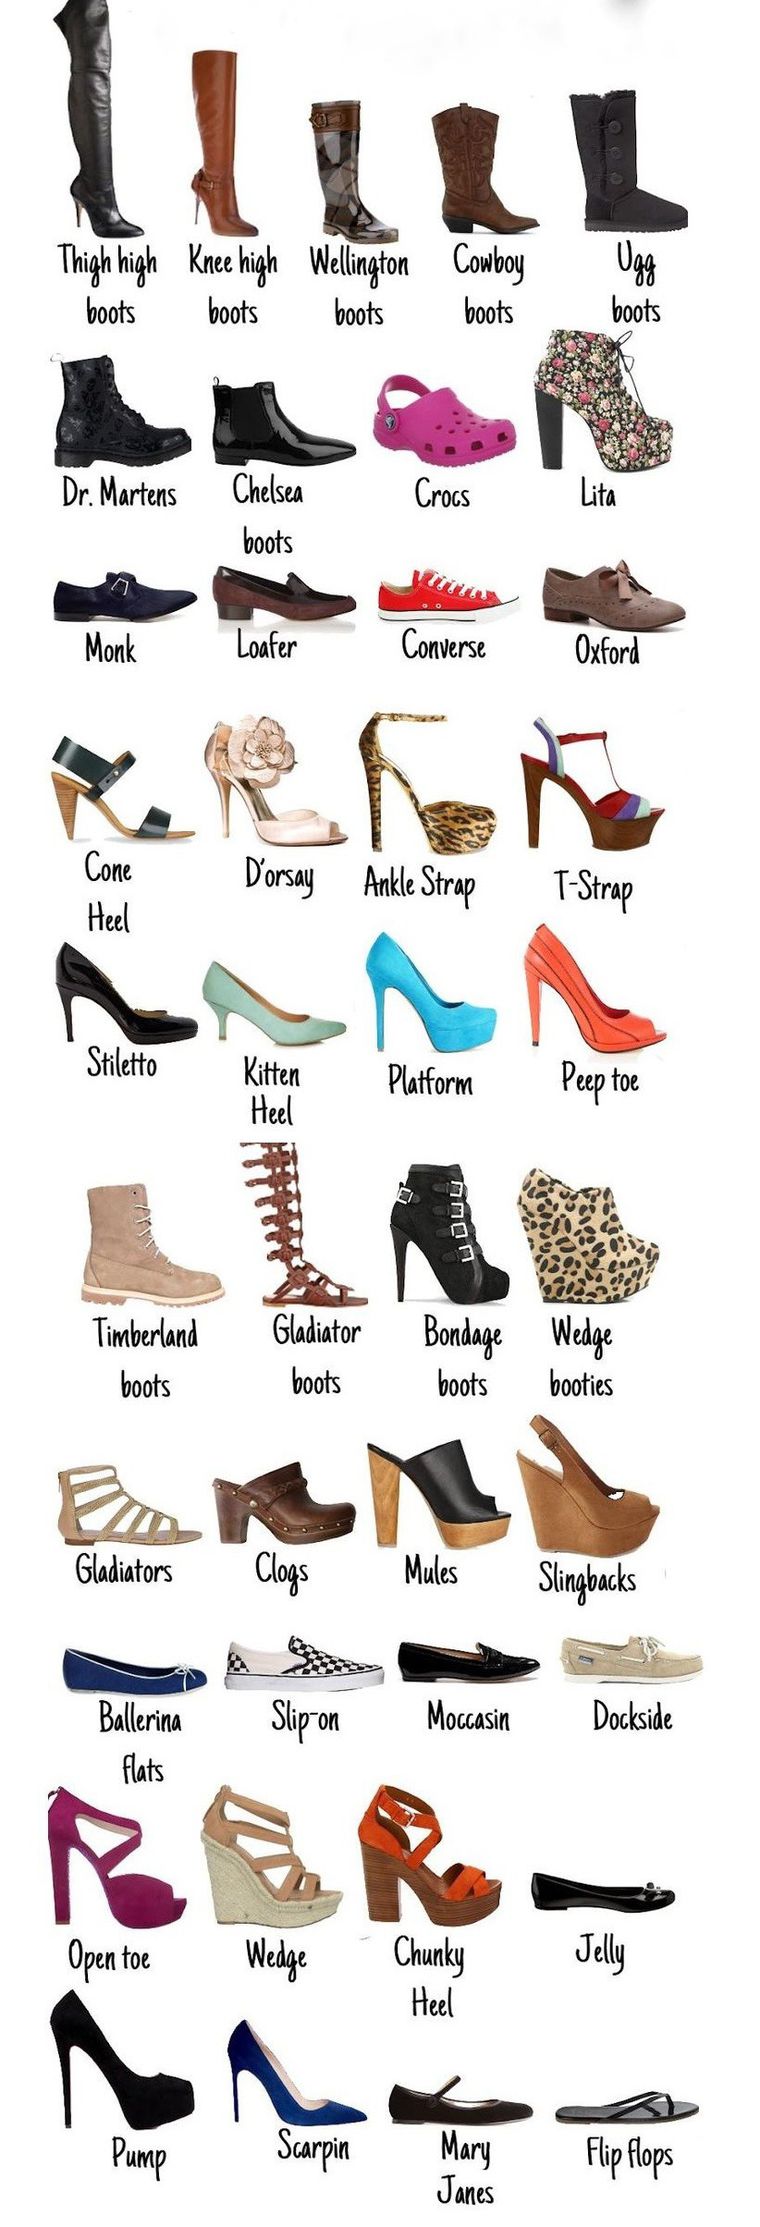 Модели женской обуви